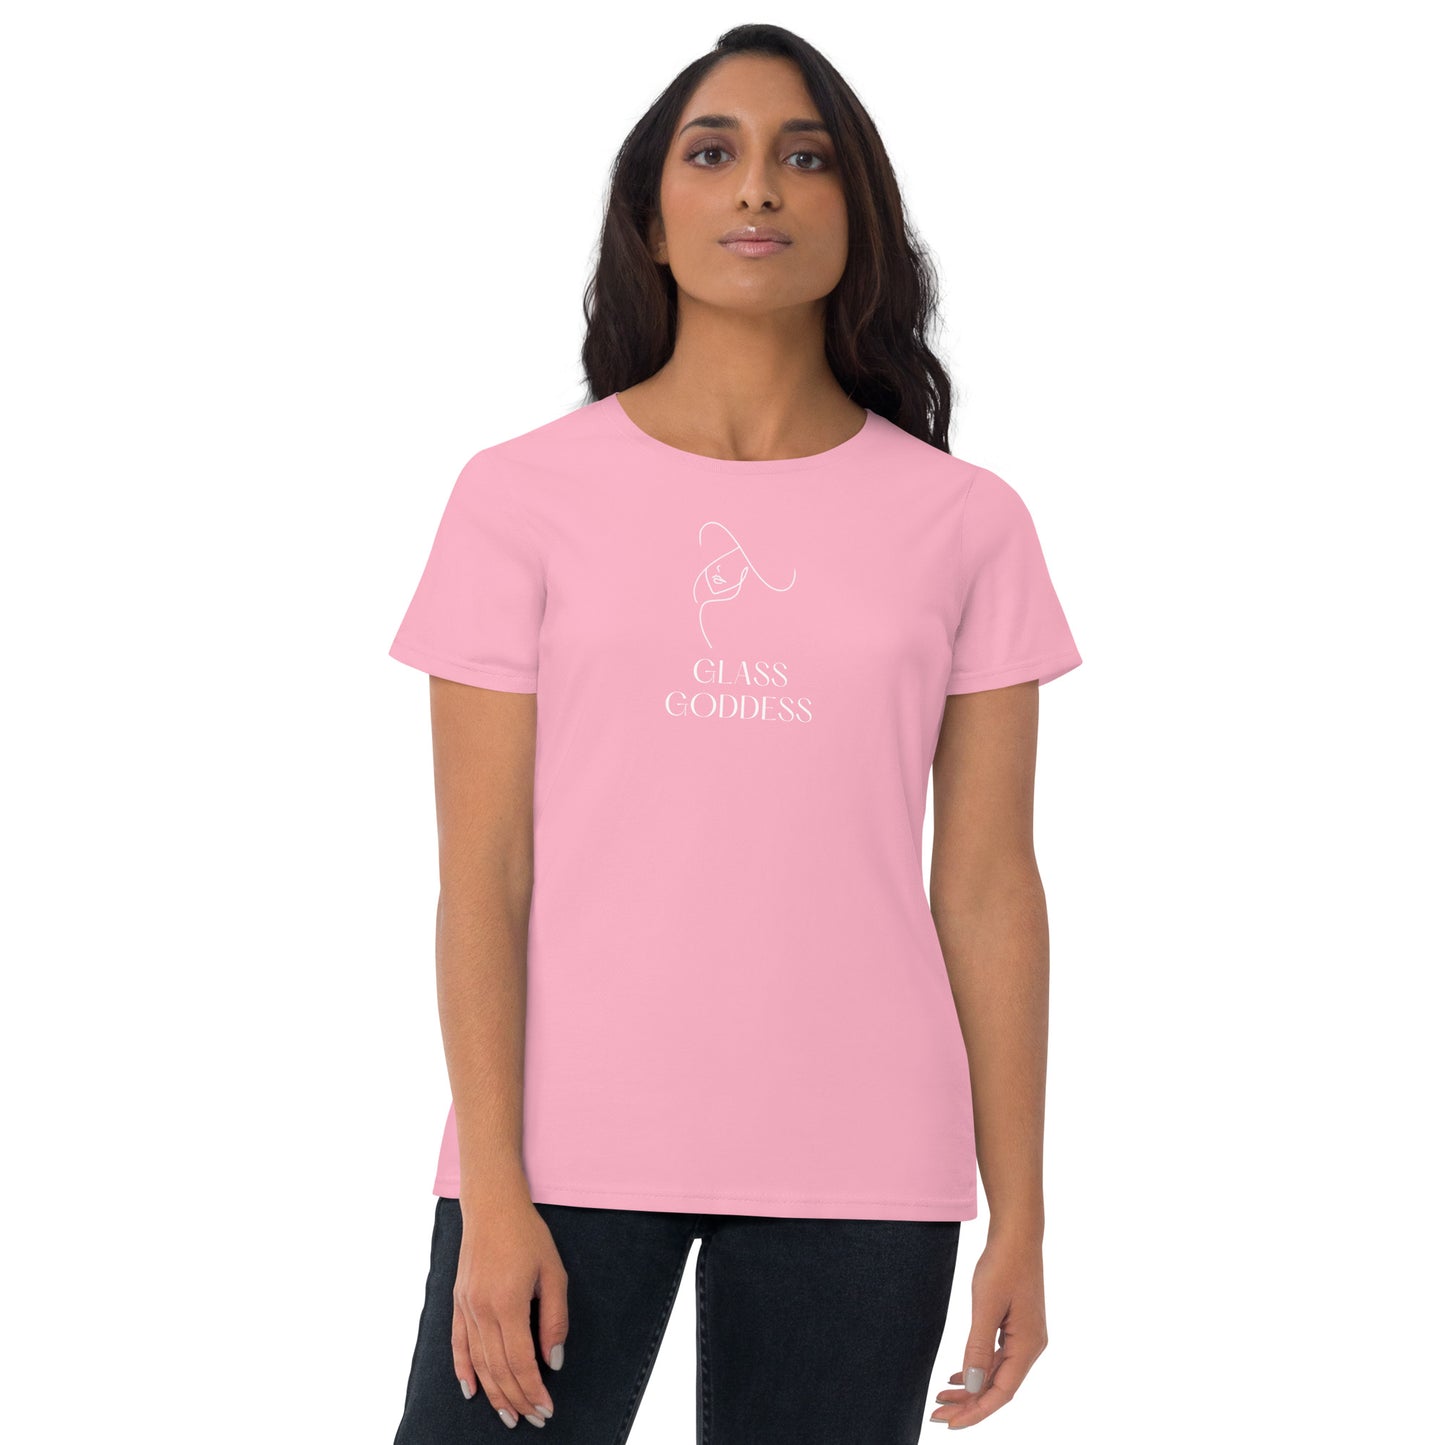 Glass Goddess Women's Fashion Fit T-Shirt - Gildan 880